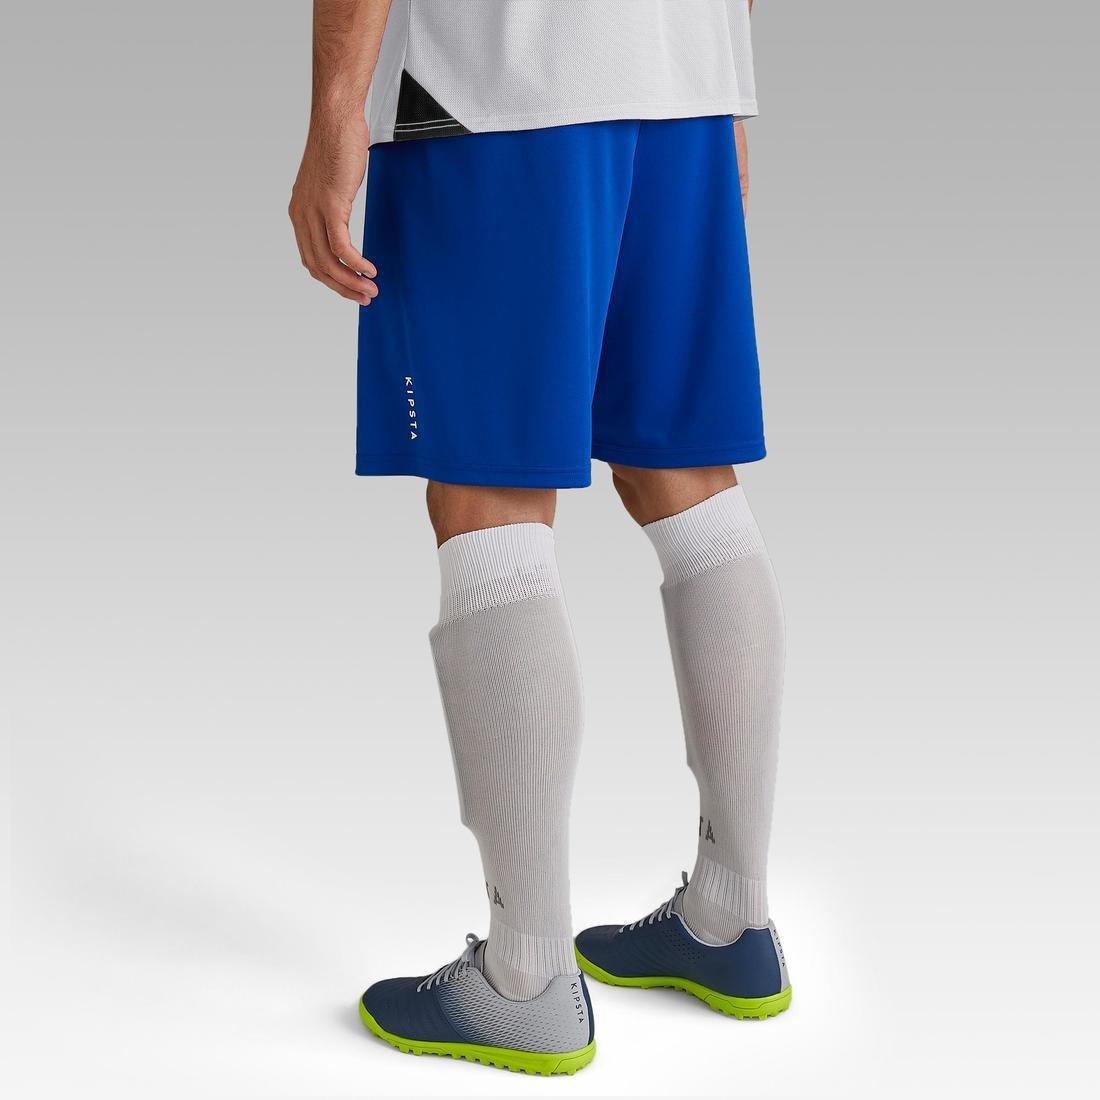 KIPSTA - Adult Football Eco-Design Shorts F100, Bright Indigo